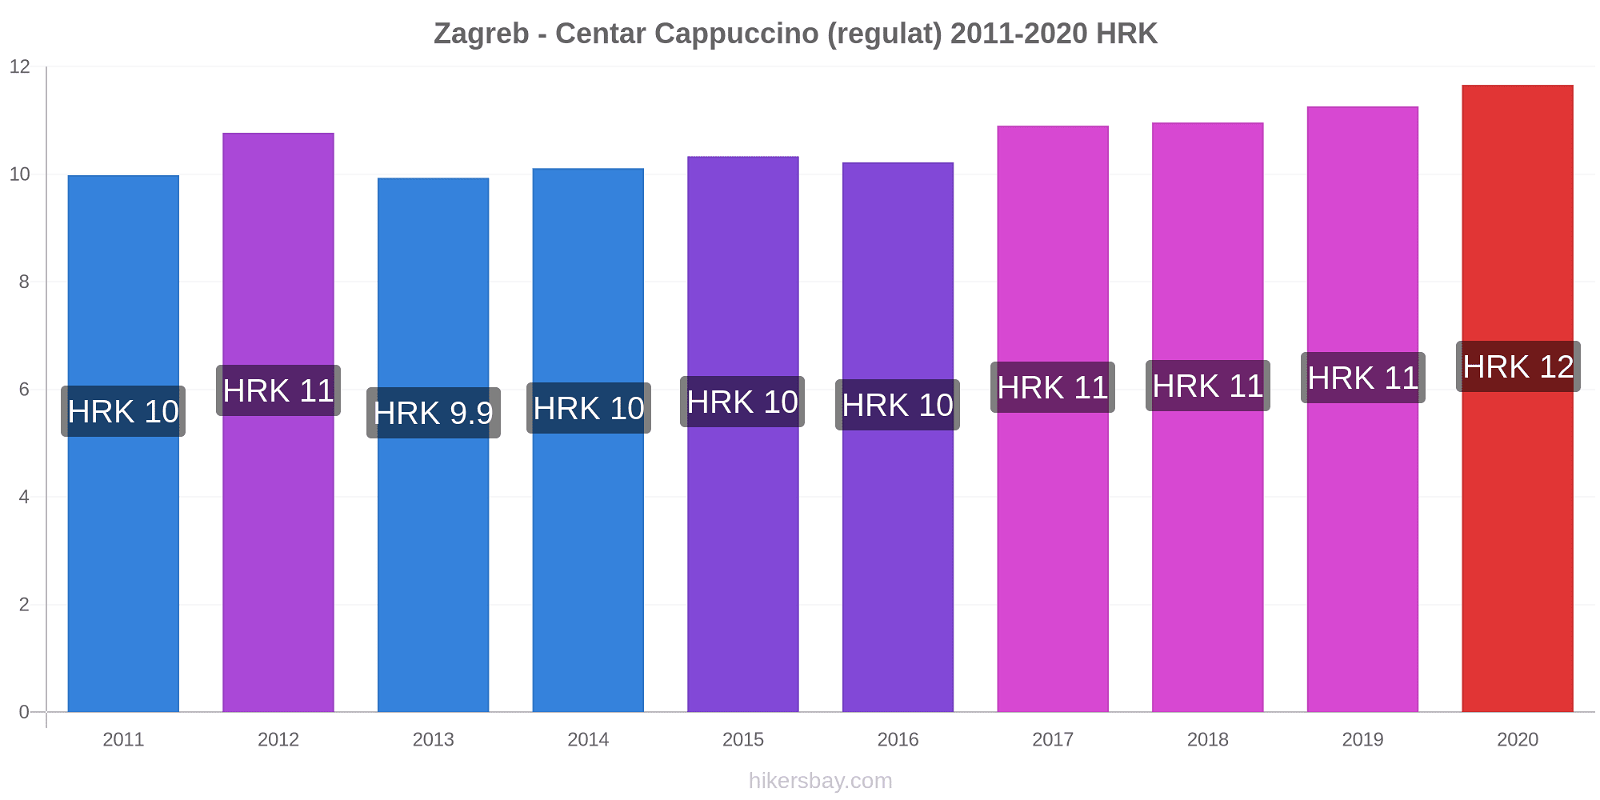 Zagreb - Centar modificări de preț Cappuccino (regulat) hikersbay.com